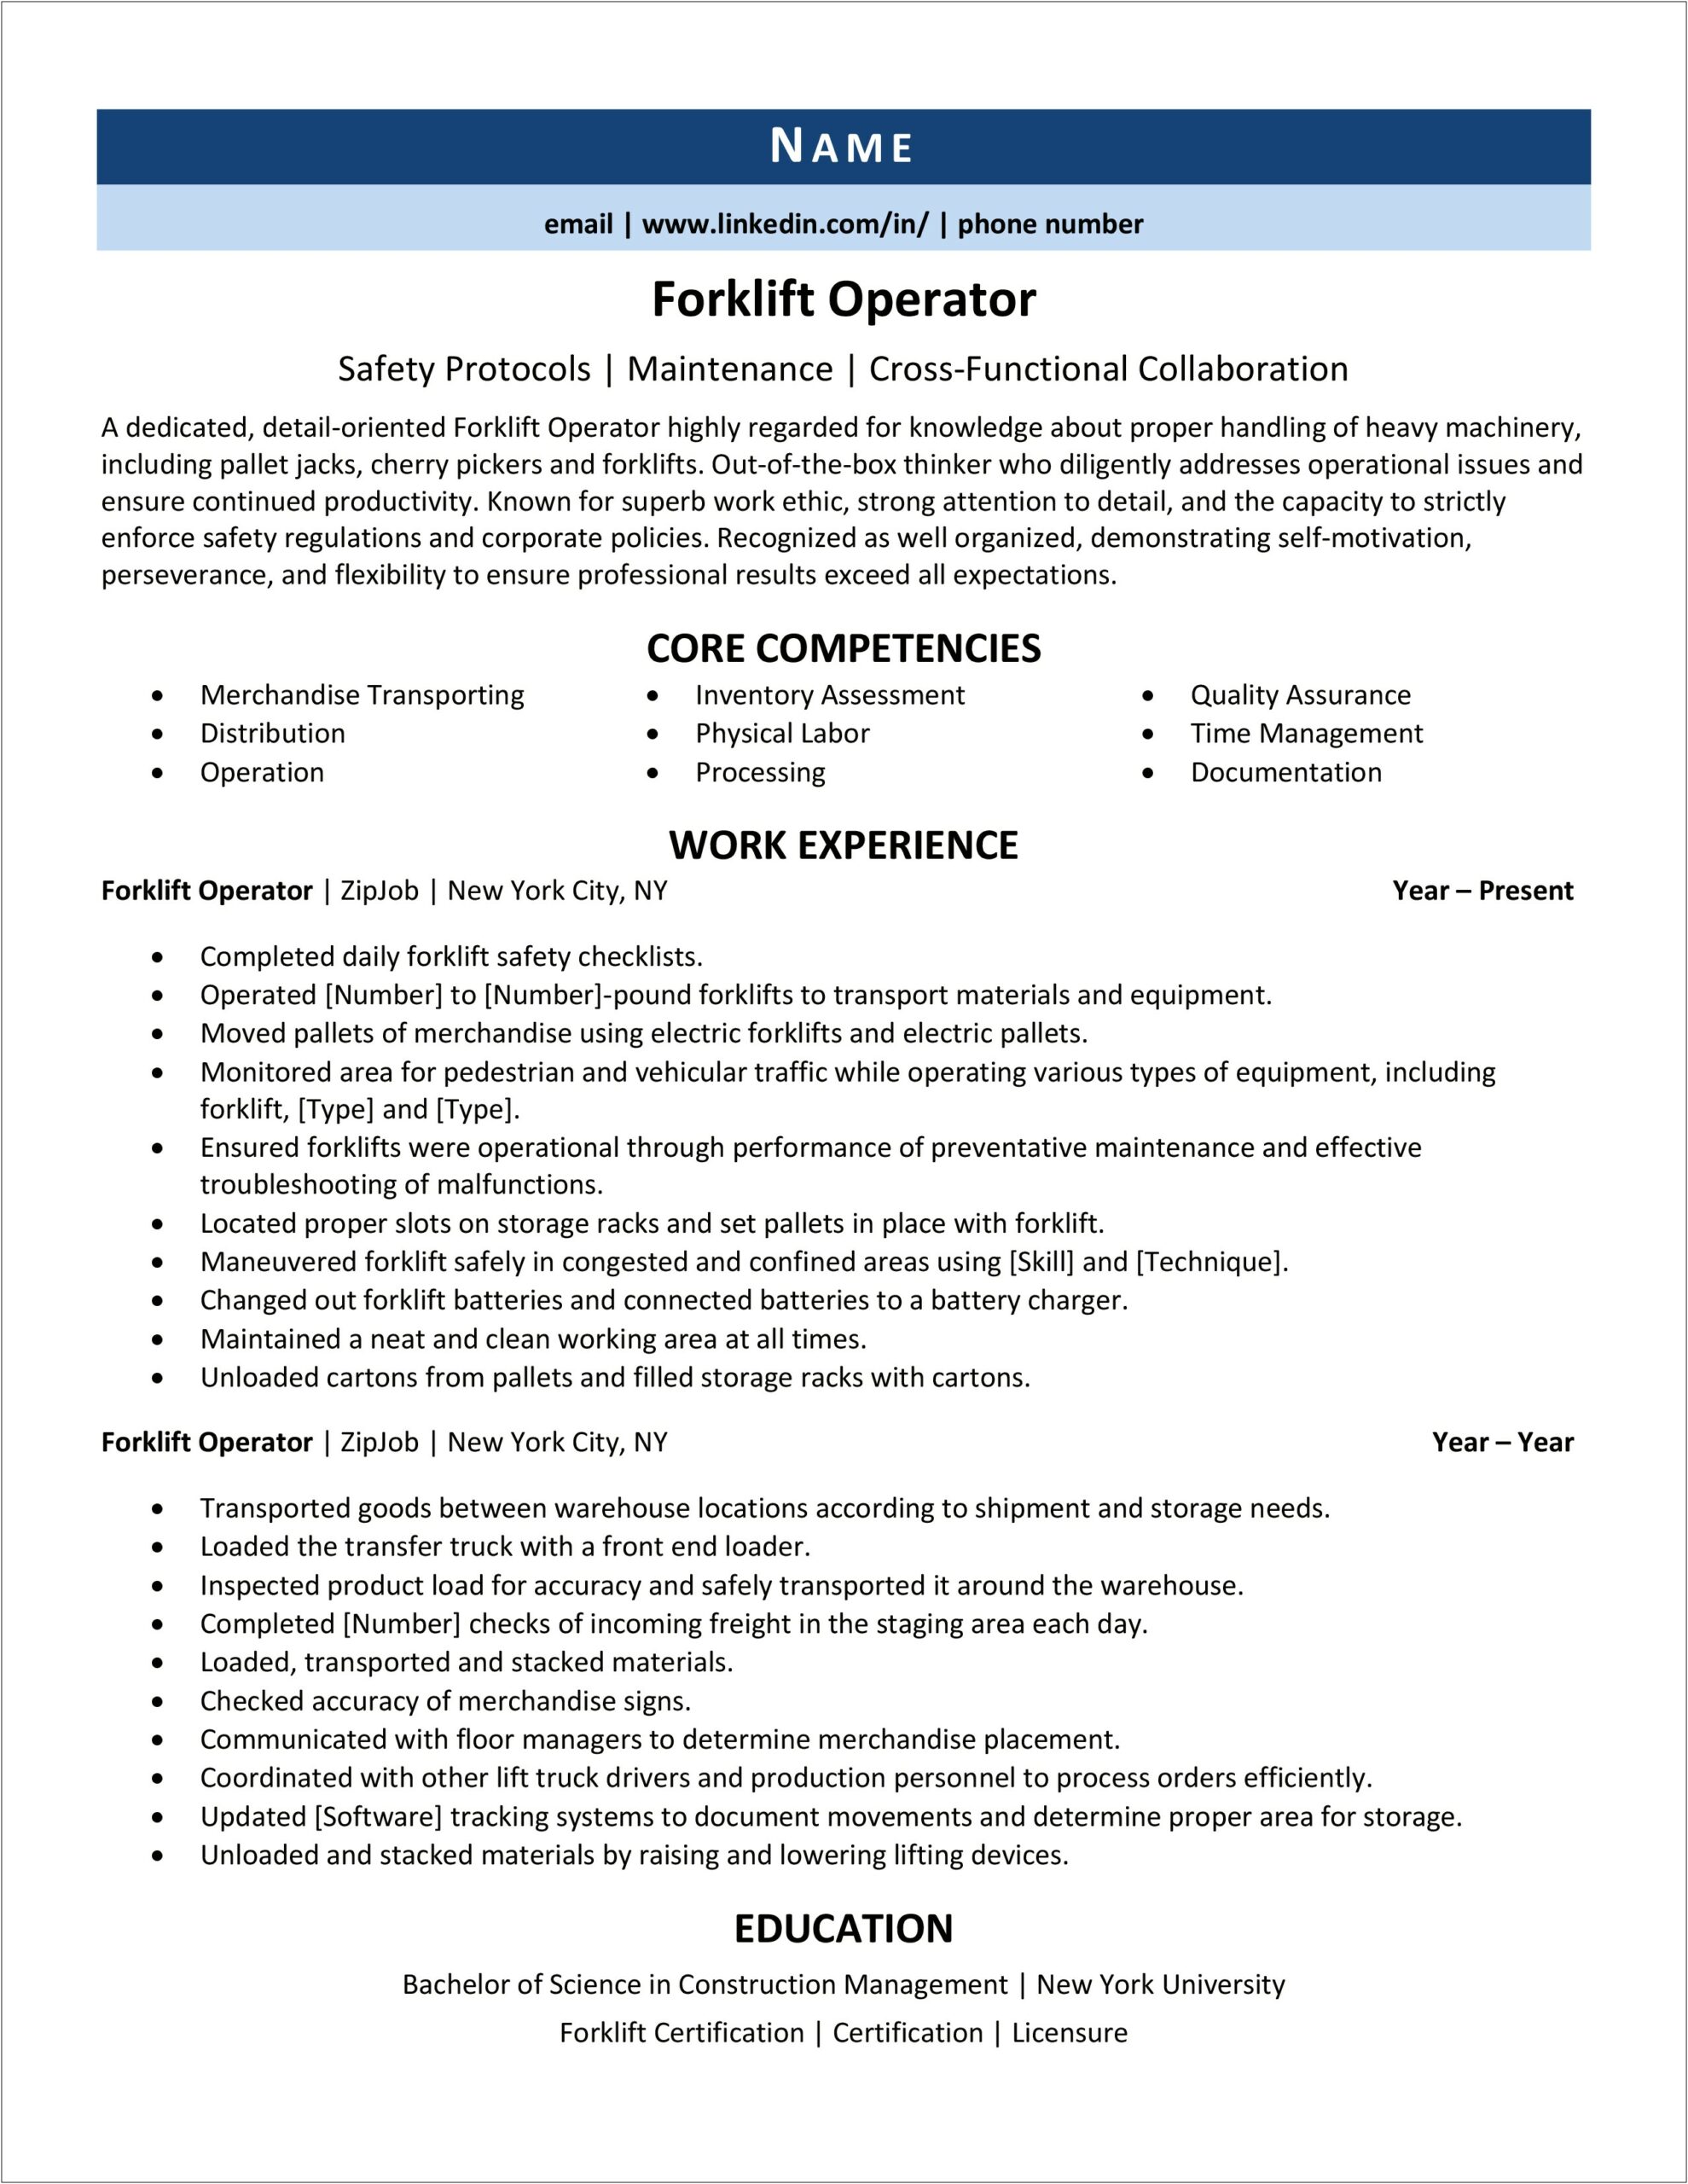 Resume Example For Forklift Warehouse Job